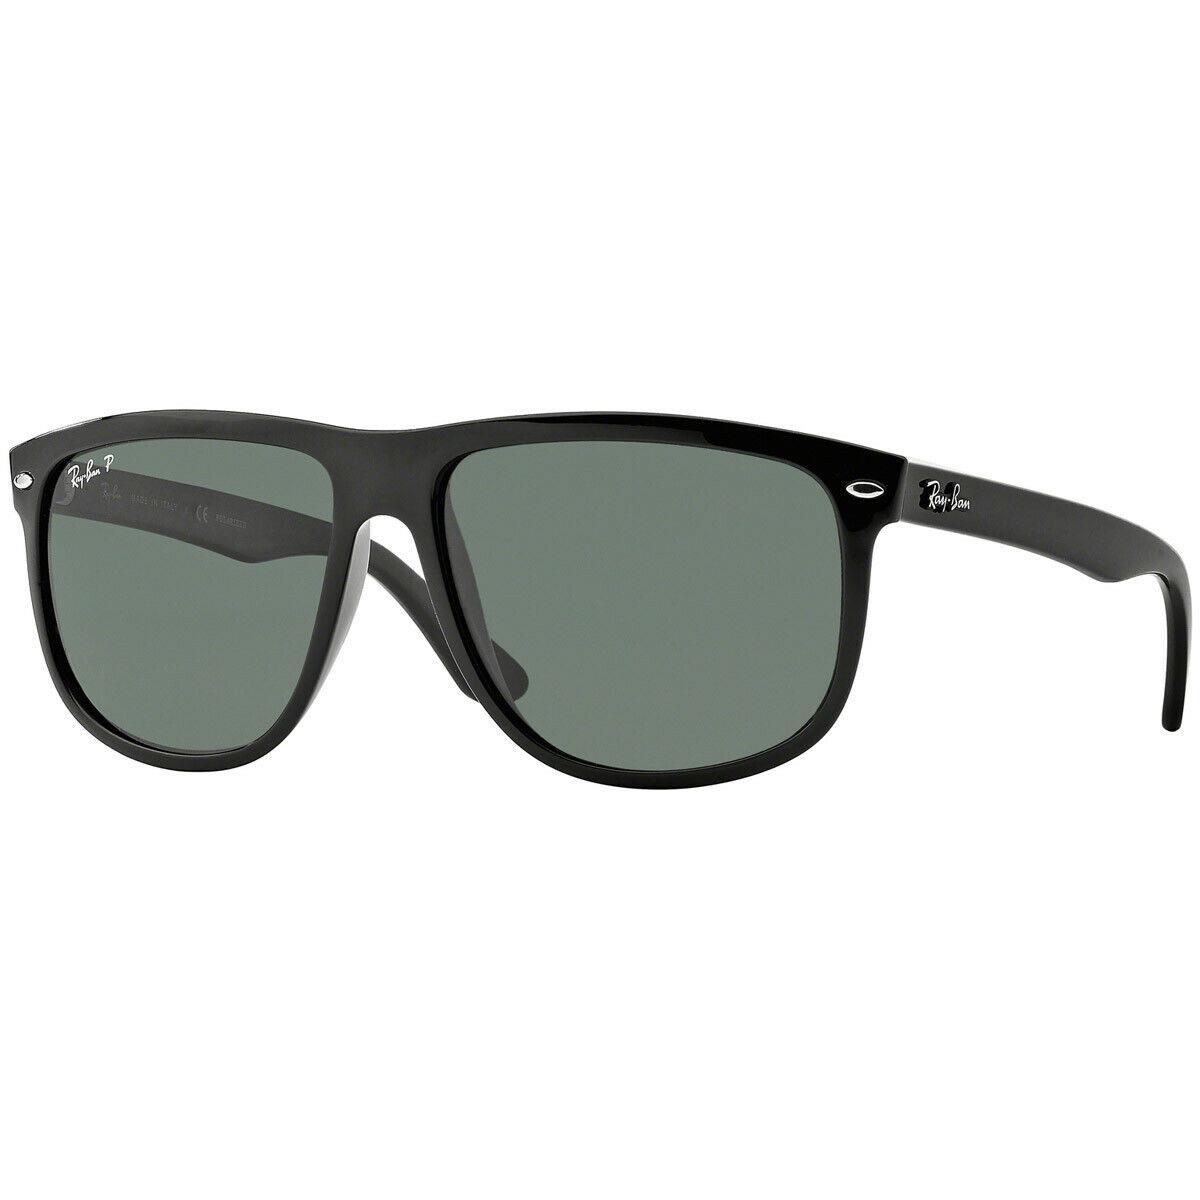 Ray-ban Highstreet Black Frame Polarized Green Lens Sunglasses RB4147 601/58 60 - Black Frame, Green Lens